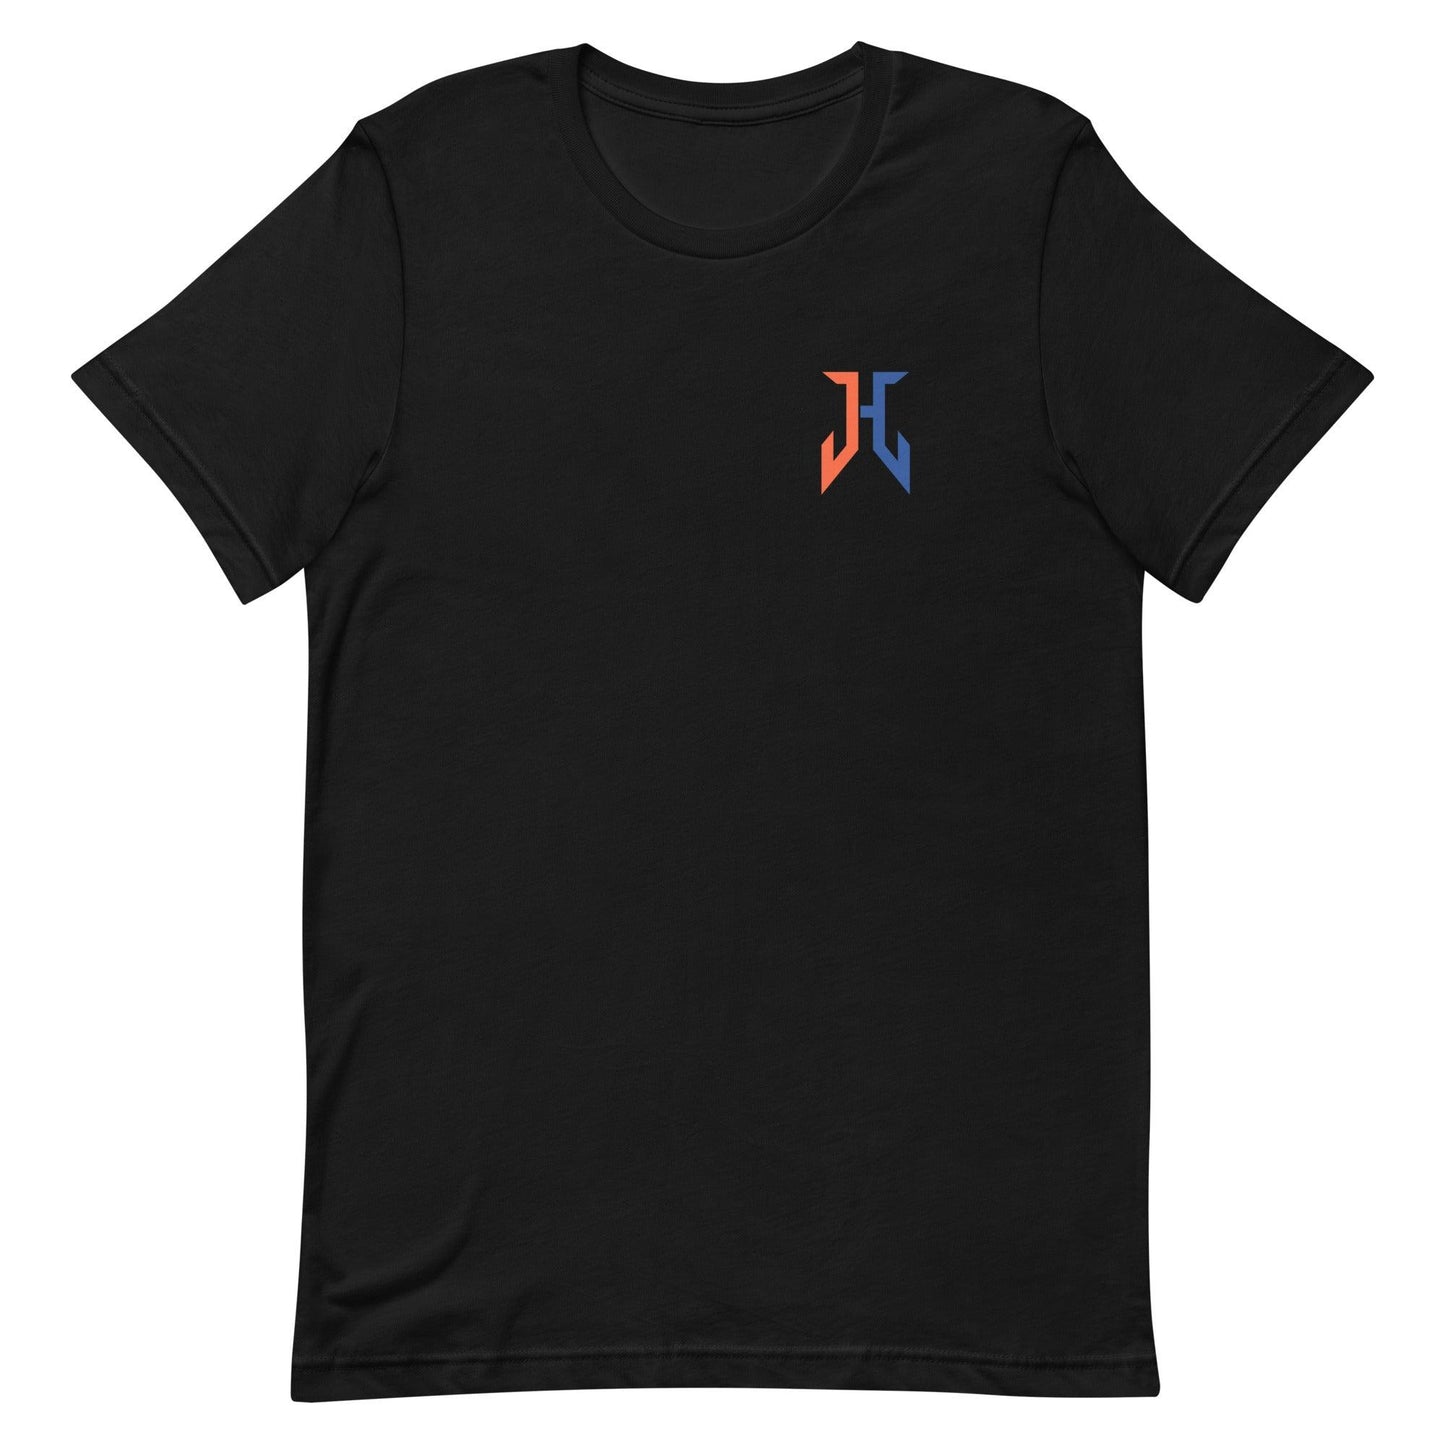 Jordan Herman "Essential" t-shirt - Fan Arch